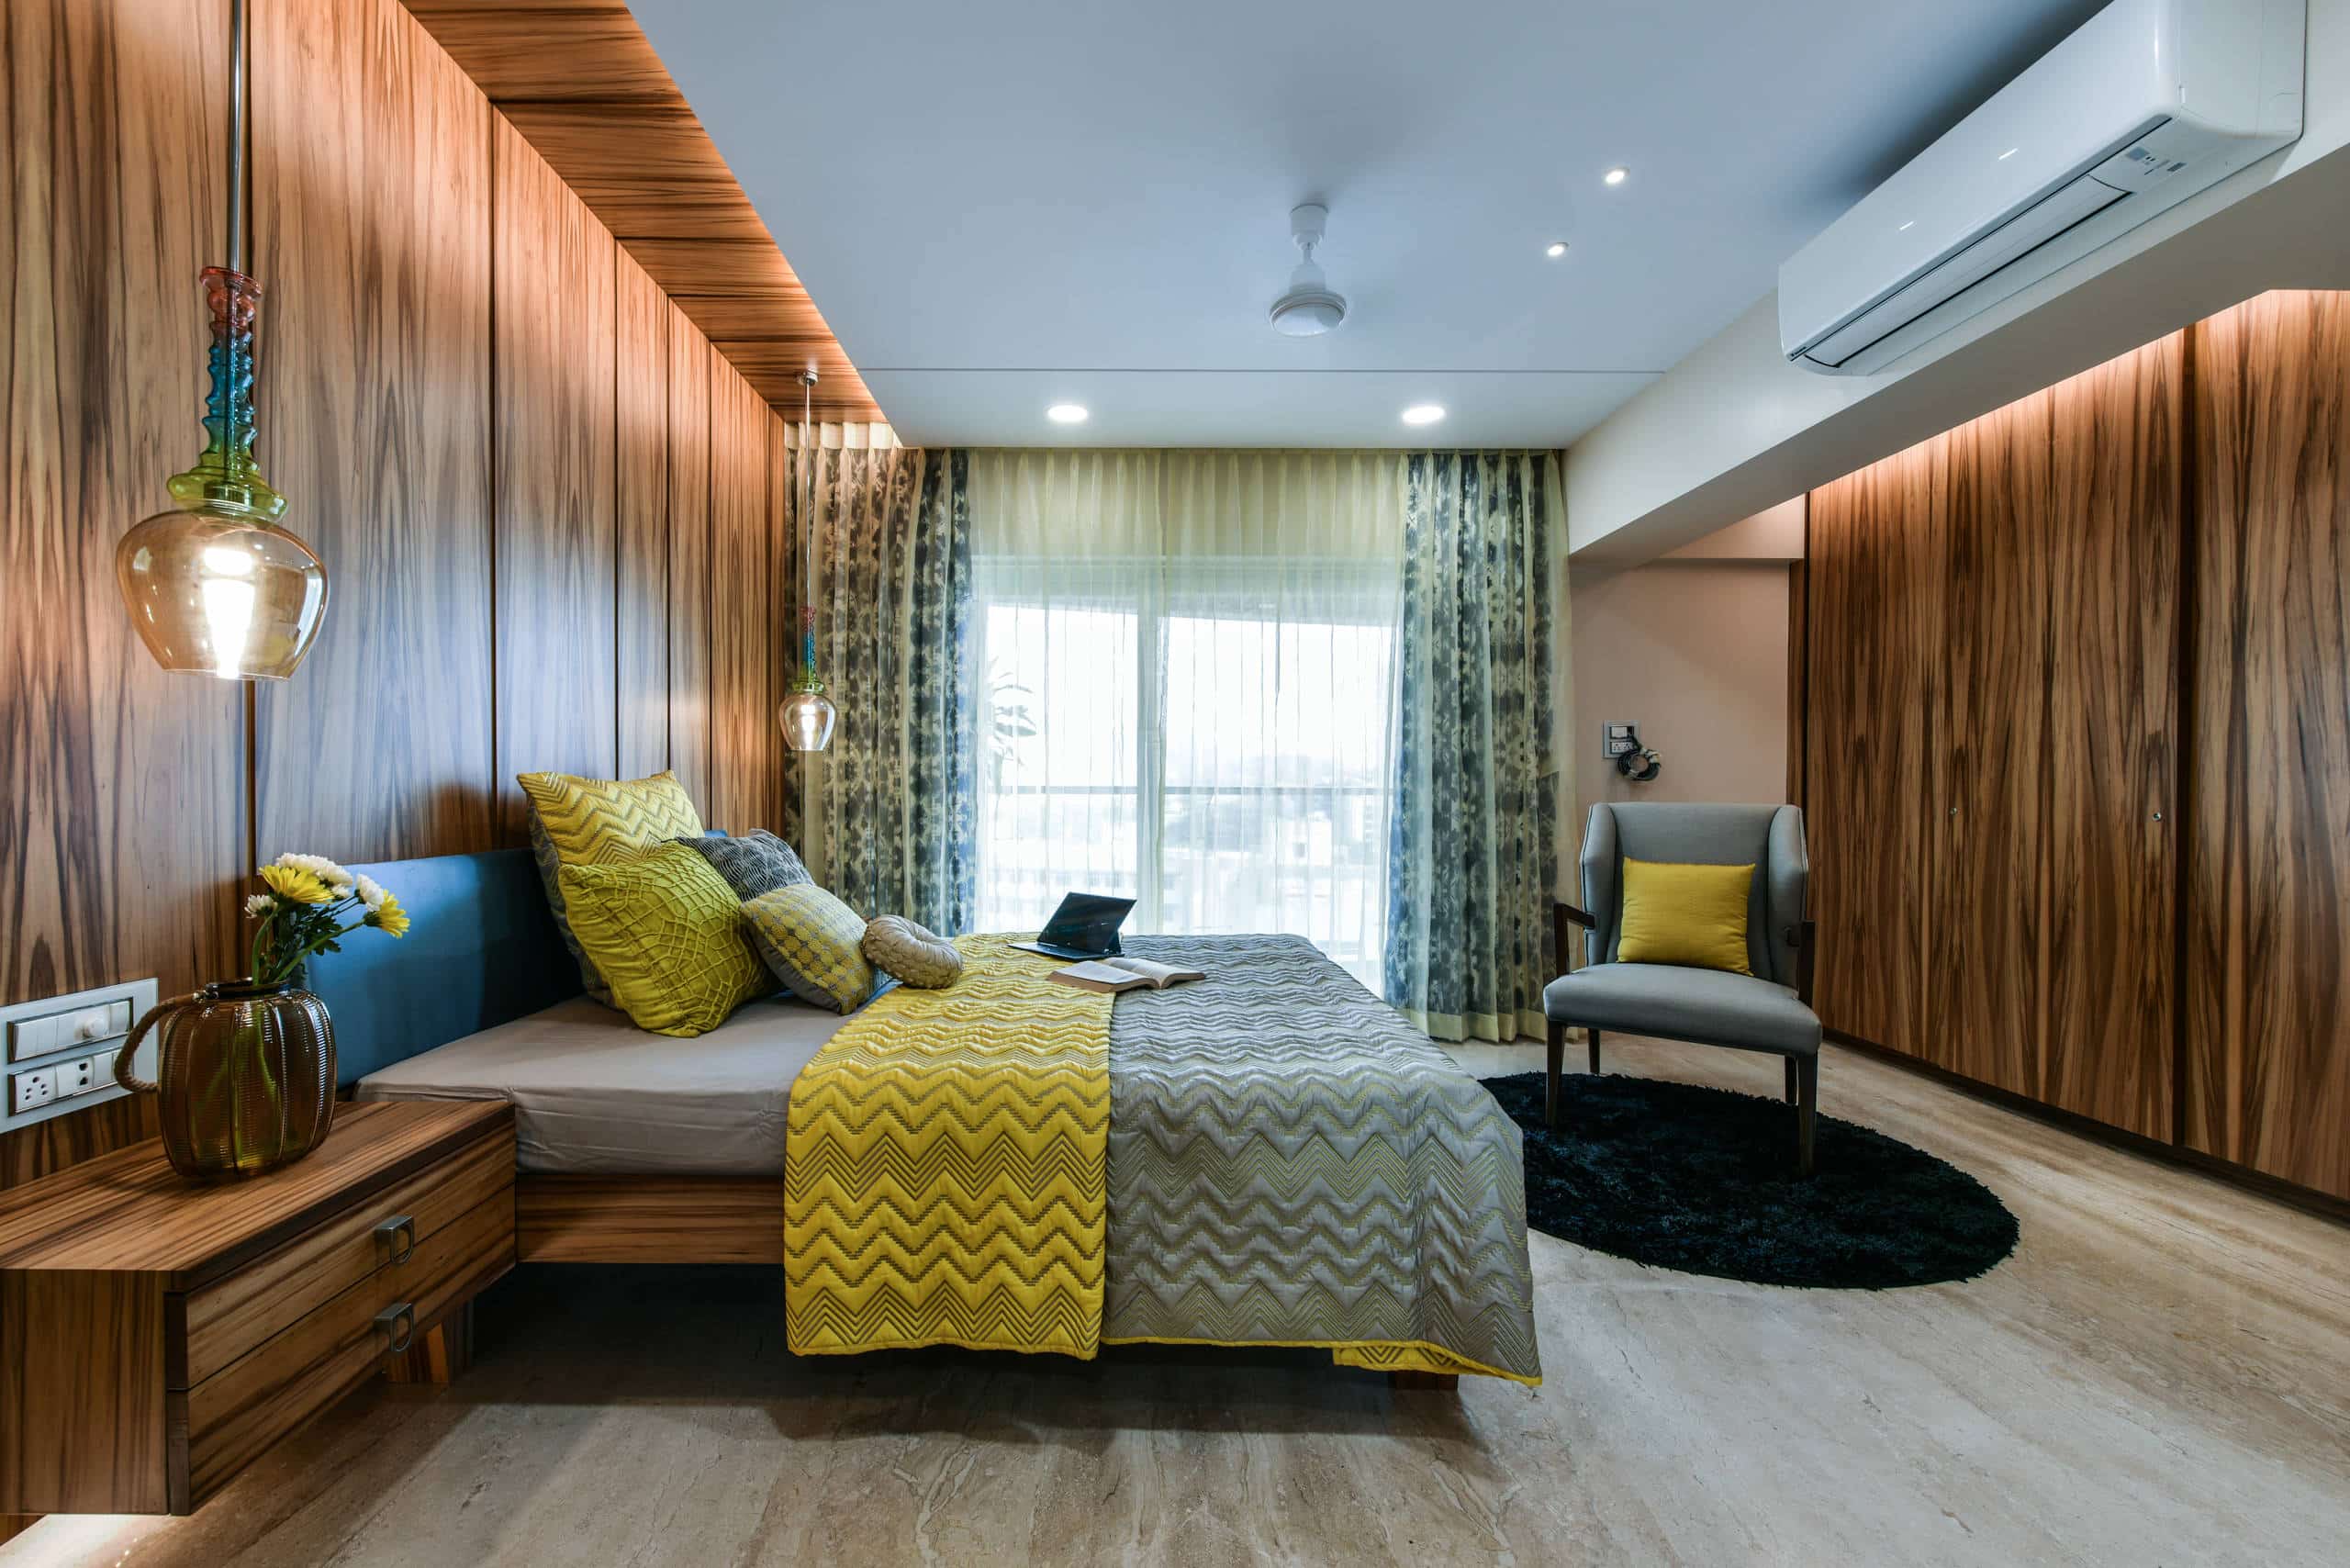 47+ Bedroom Interior Design India Background - Bondi Bathers